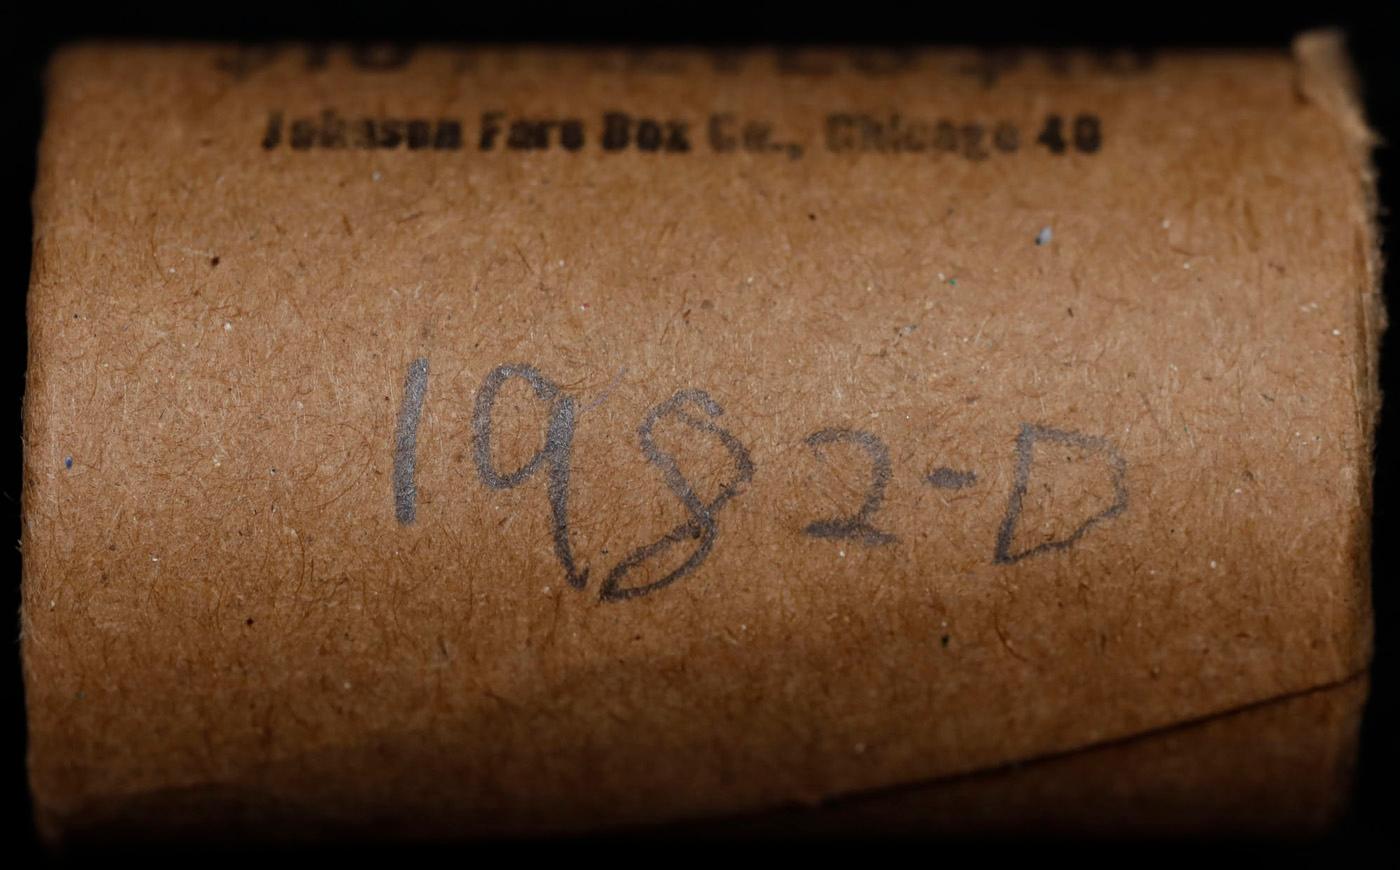 BU Shotgun Kennedy 50c roll, 1982-d 20 pcs Federal Reserve Bank of Minneapolis Wrapper $10